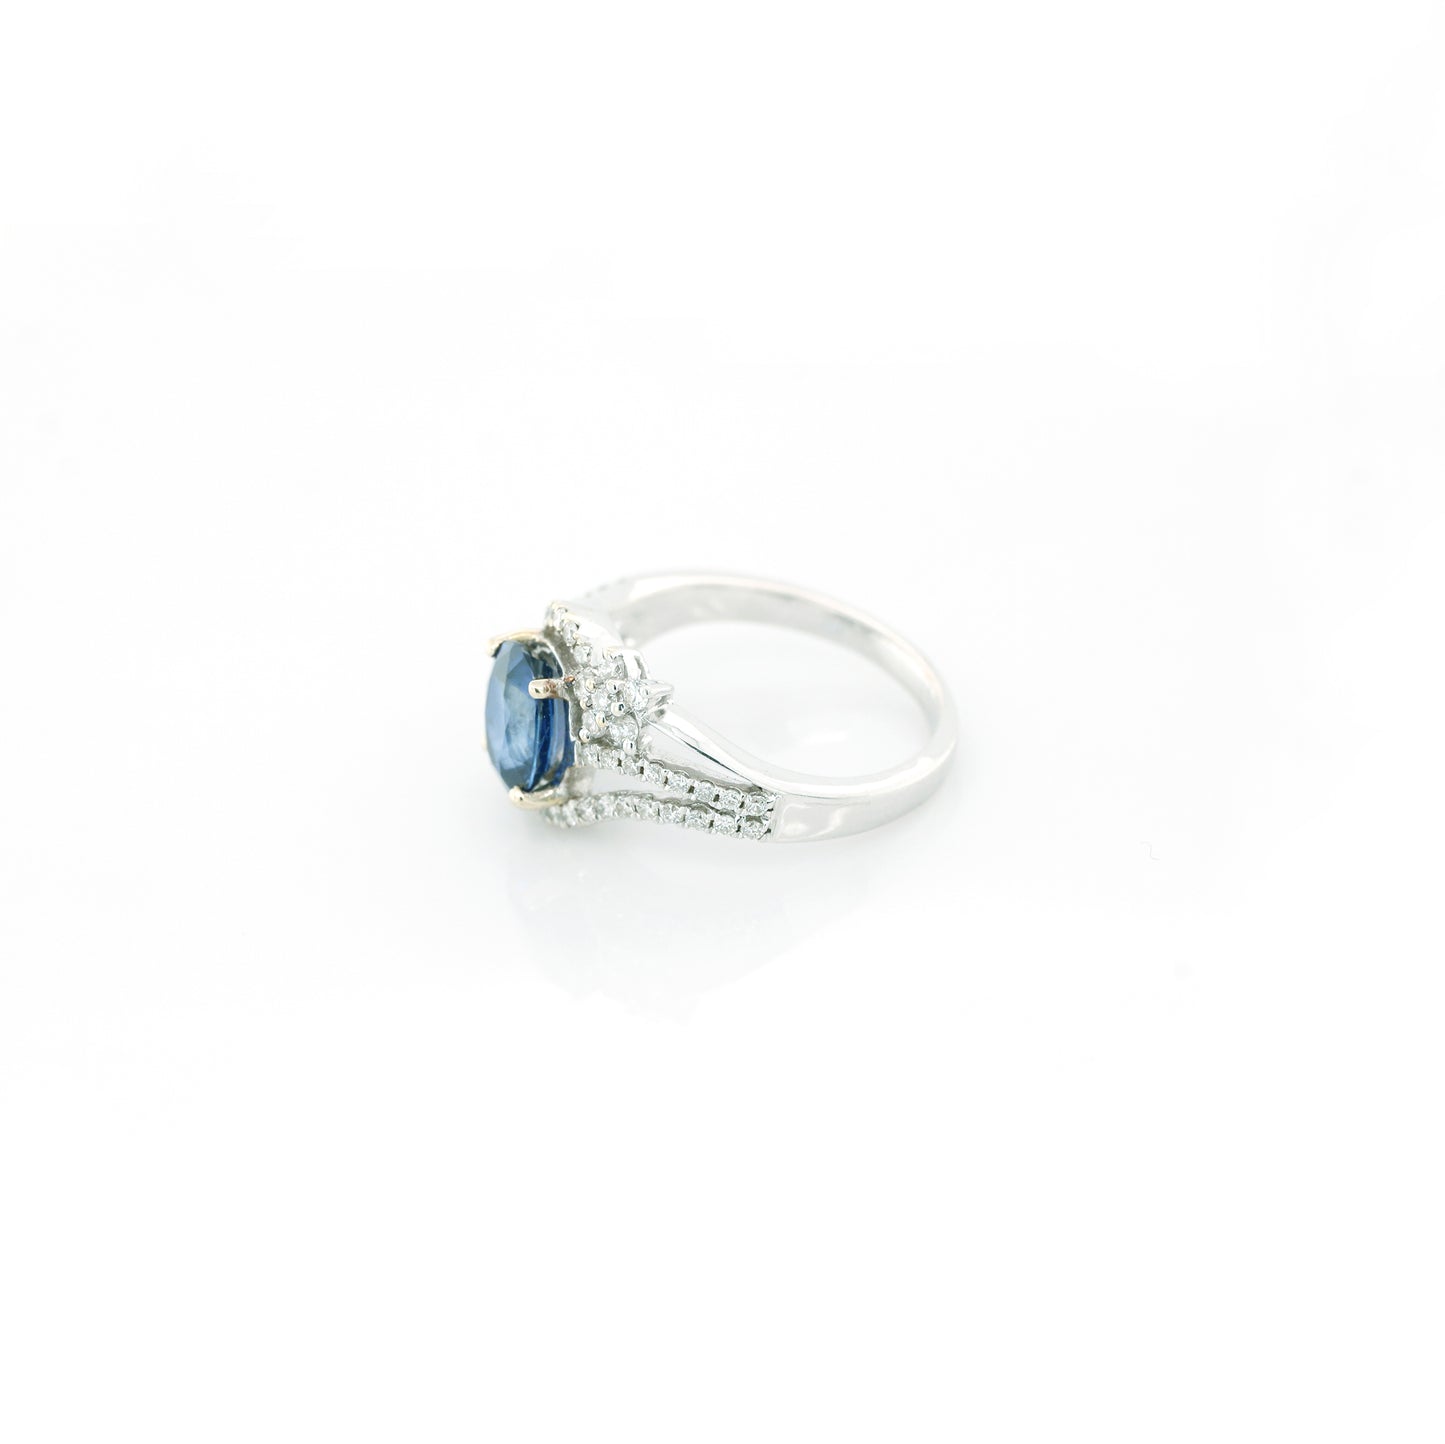 Blue Sapphire & Diamond Ring - 18K White Gold  4.54gm